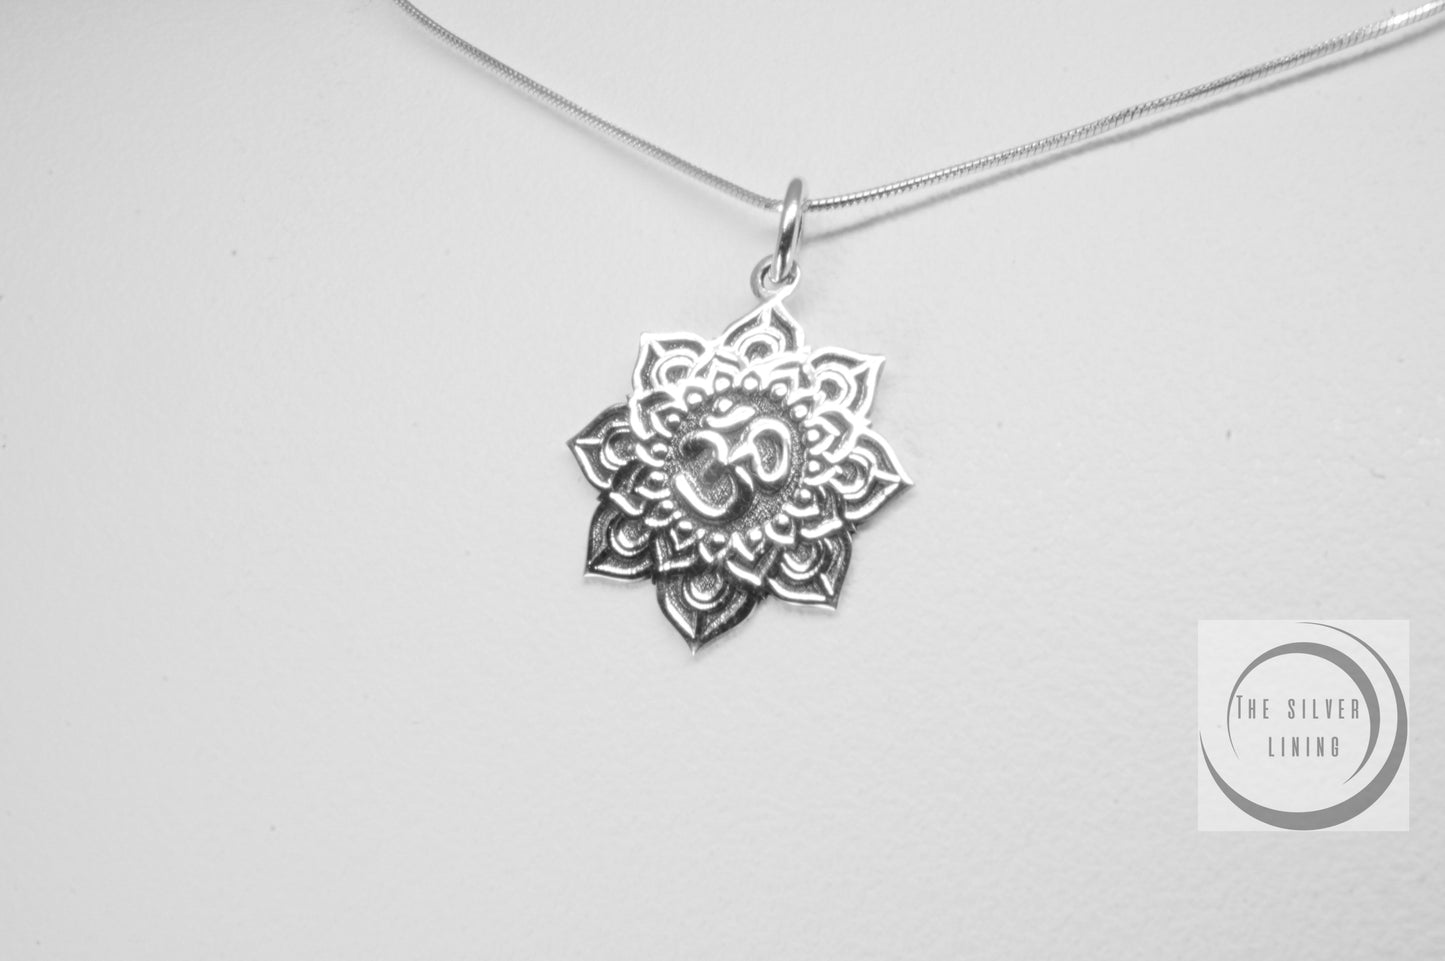 Dije de plata 925, Símbolo de OM en Mandala con cadena incluída